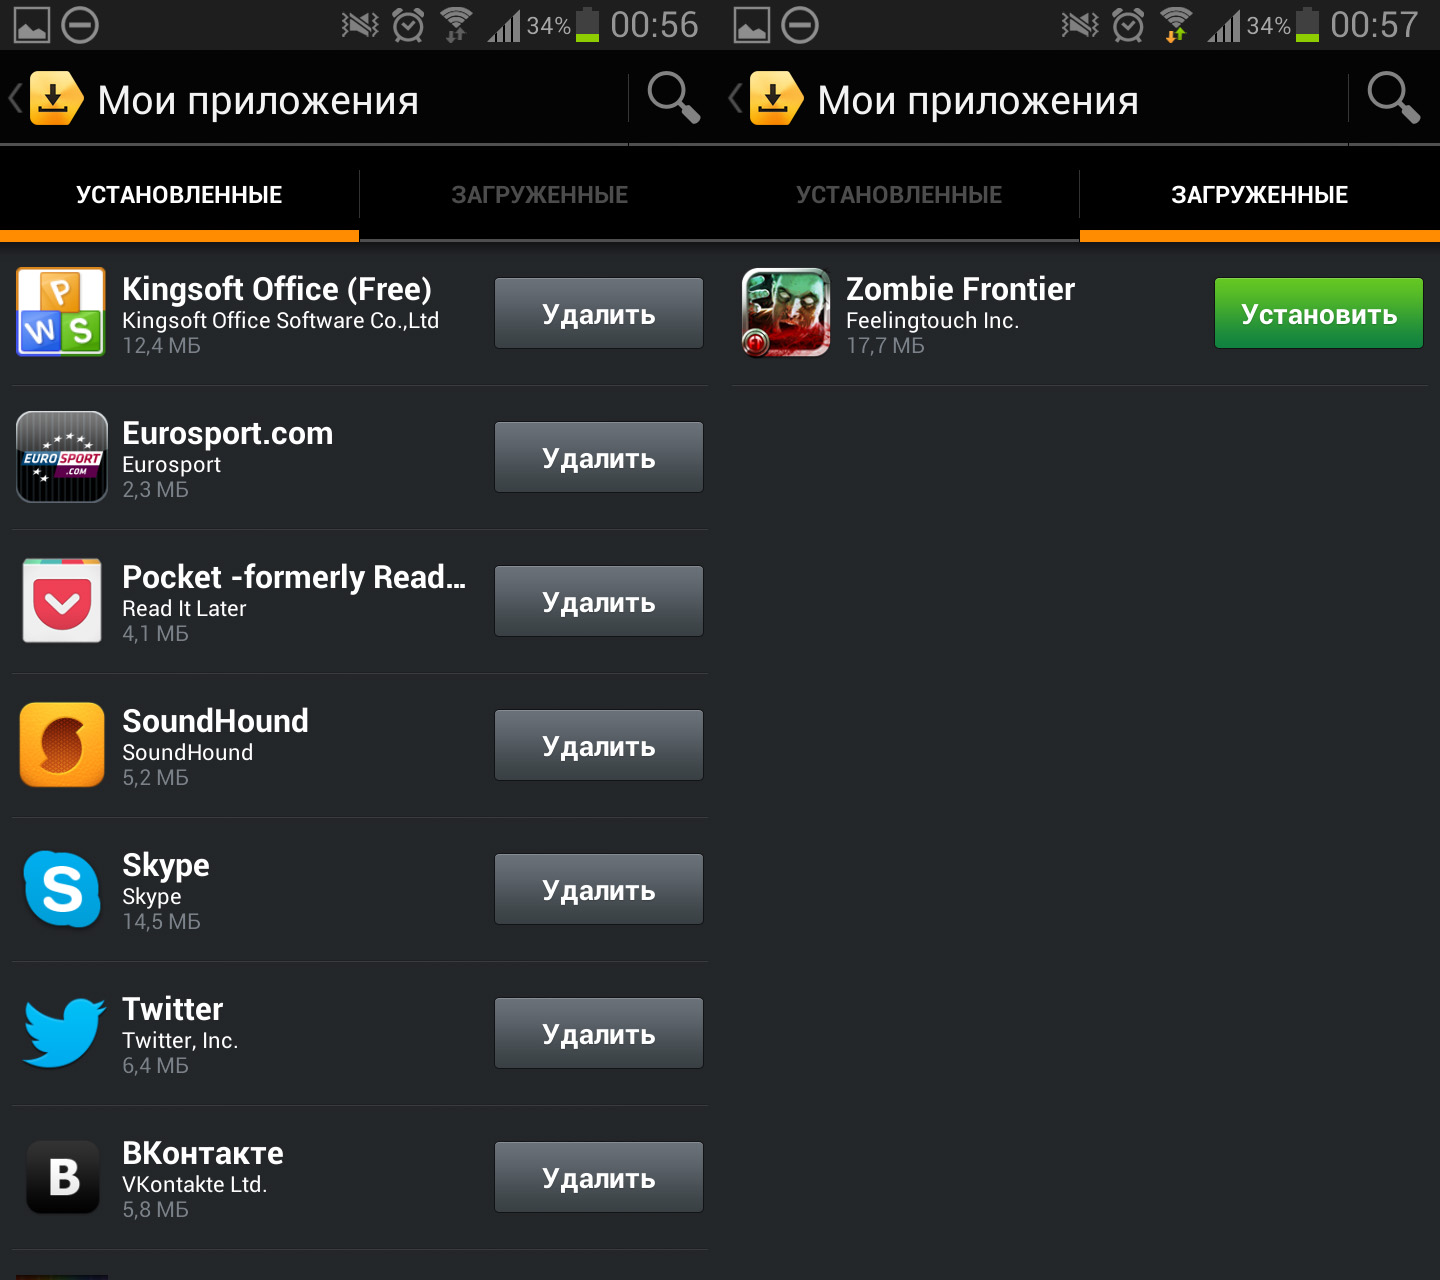 Русский аналог плей маркета. Русский магазин приложений для андроид. Альтернативные магазины приложений для Android. Сторонний магазин приложений Android.